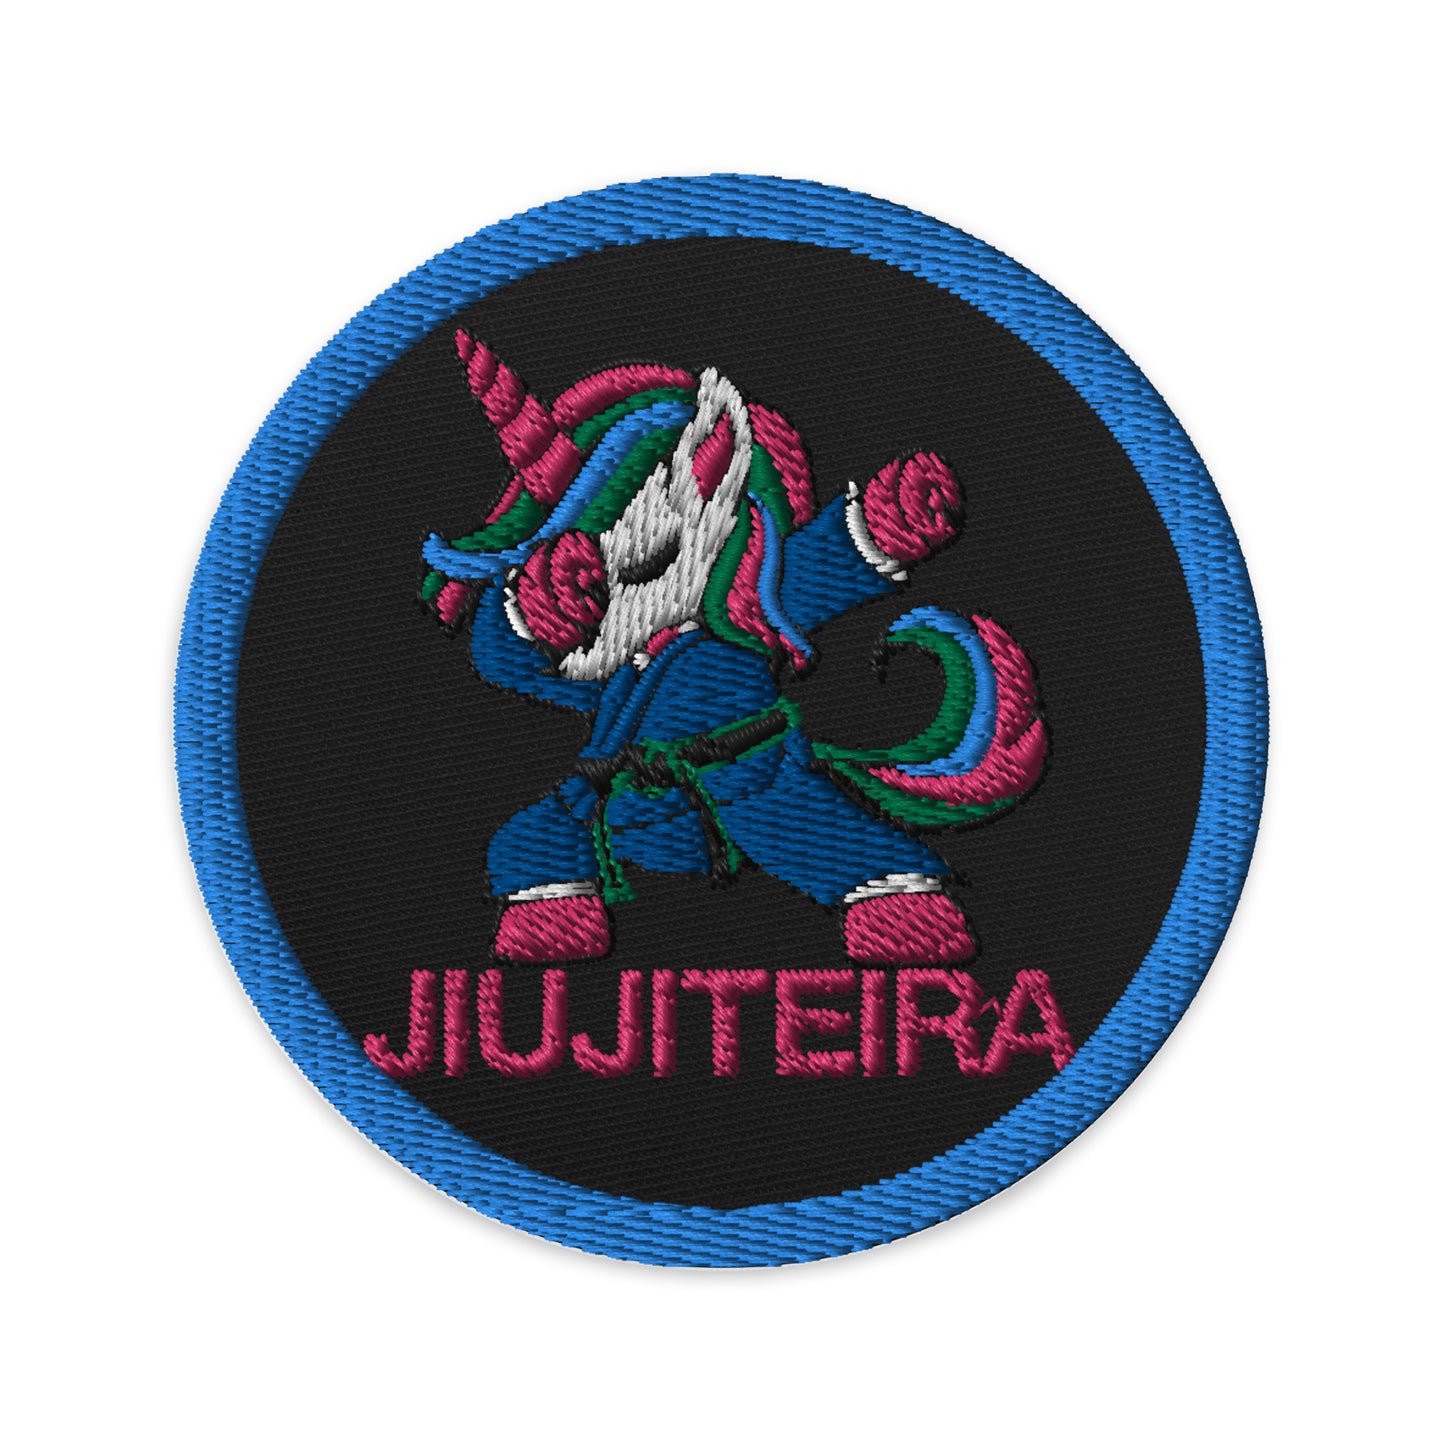 Embroidered patches - Jiujiteira Unicorn - The Women of Jiujitsu